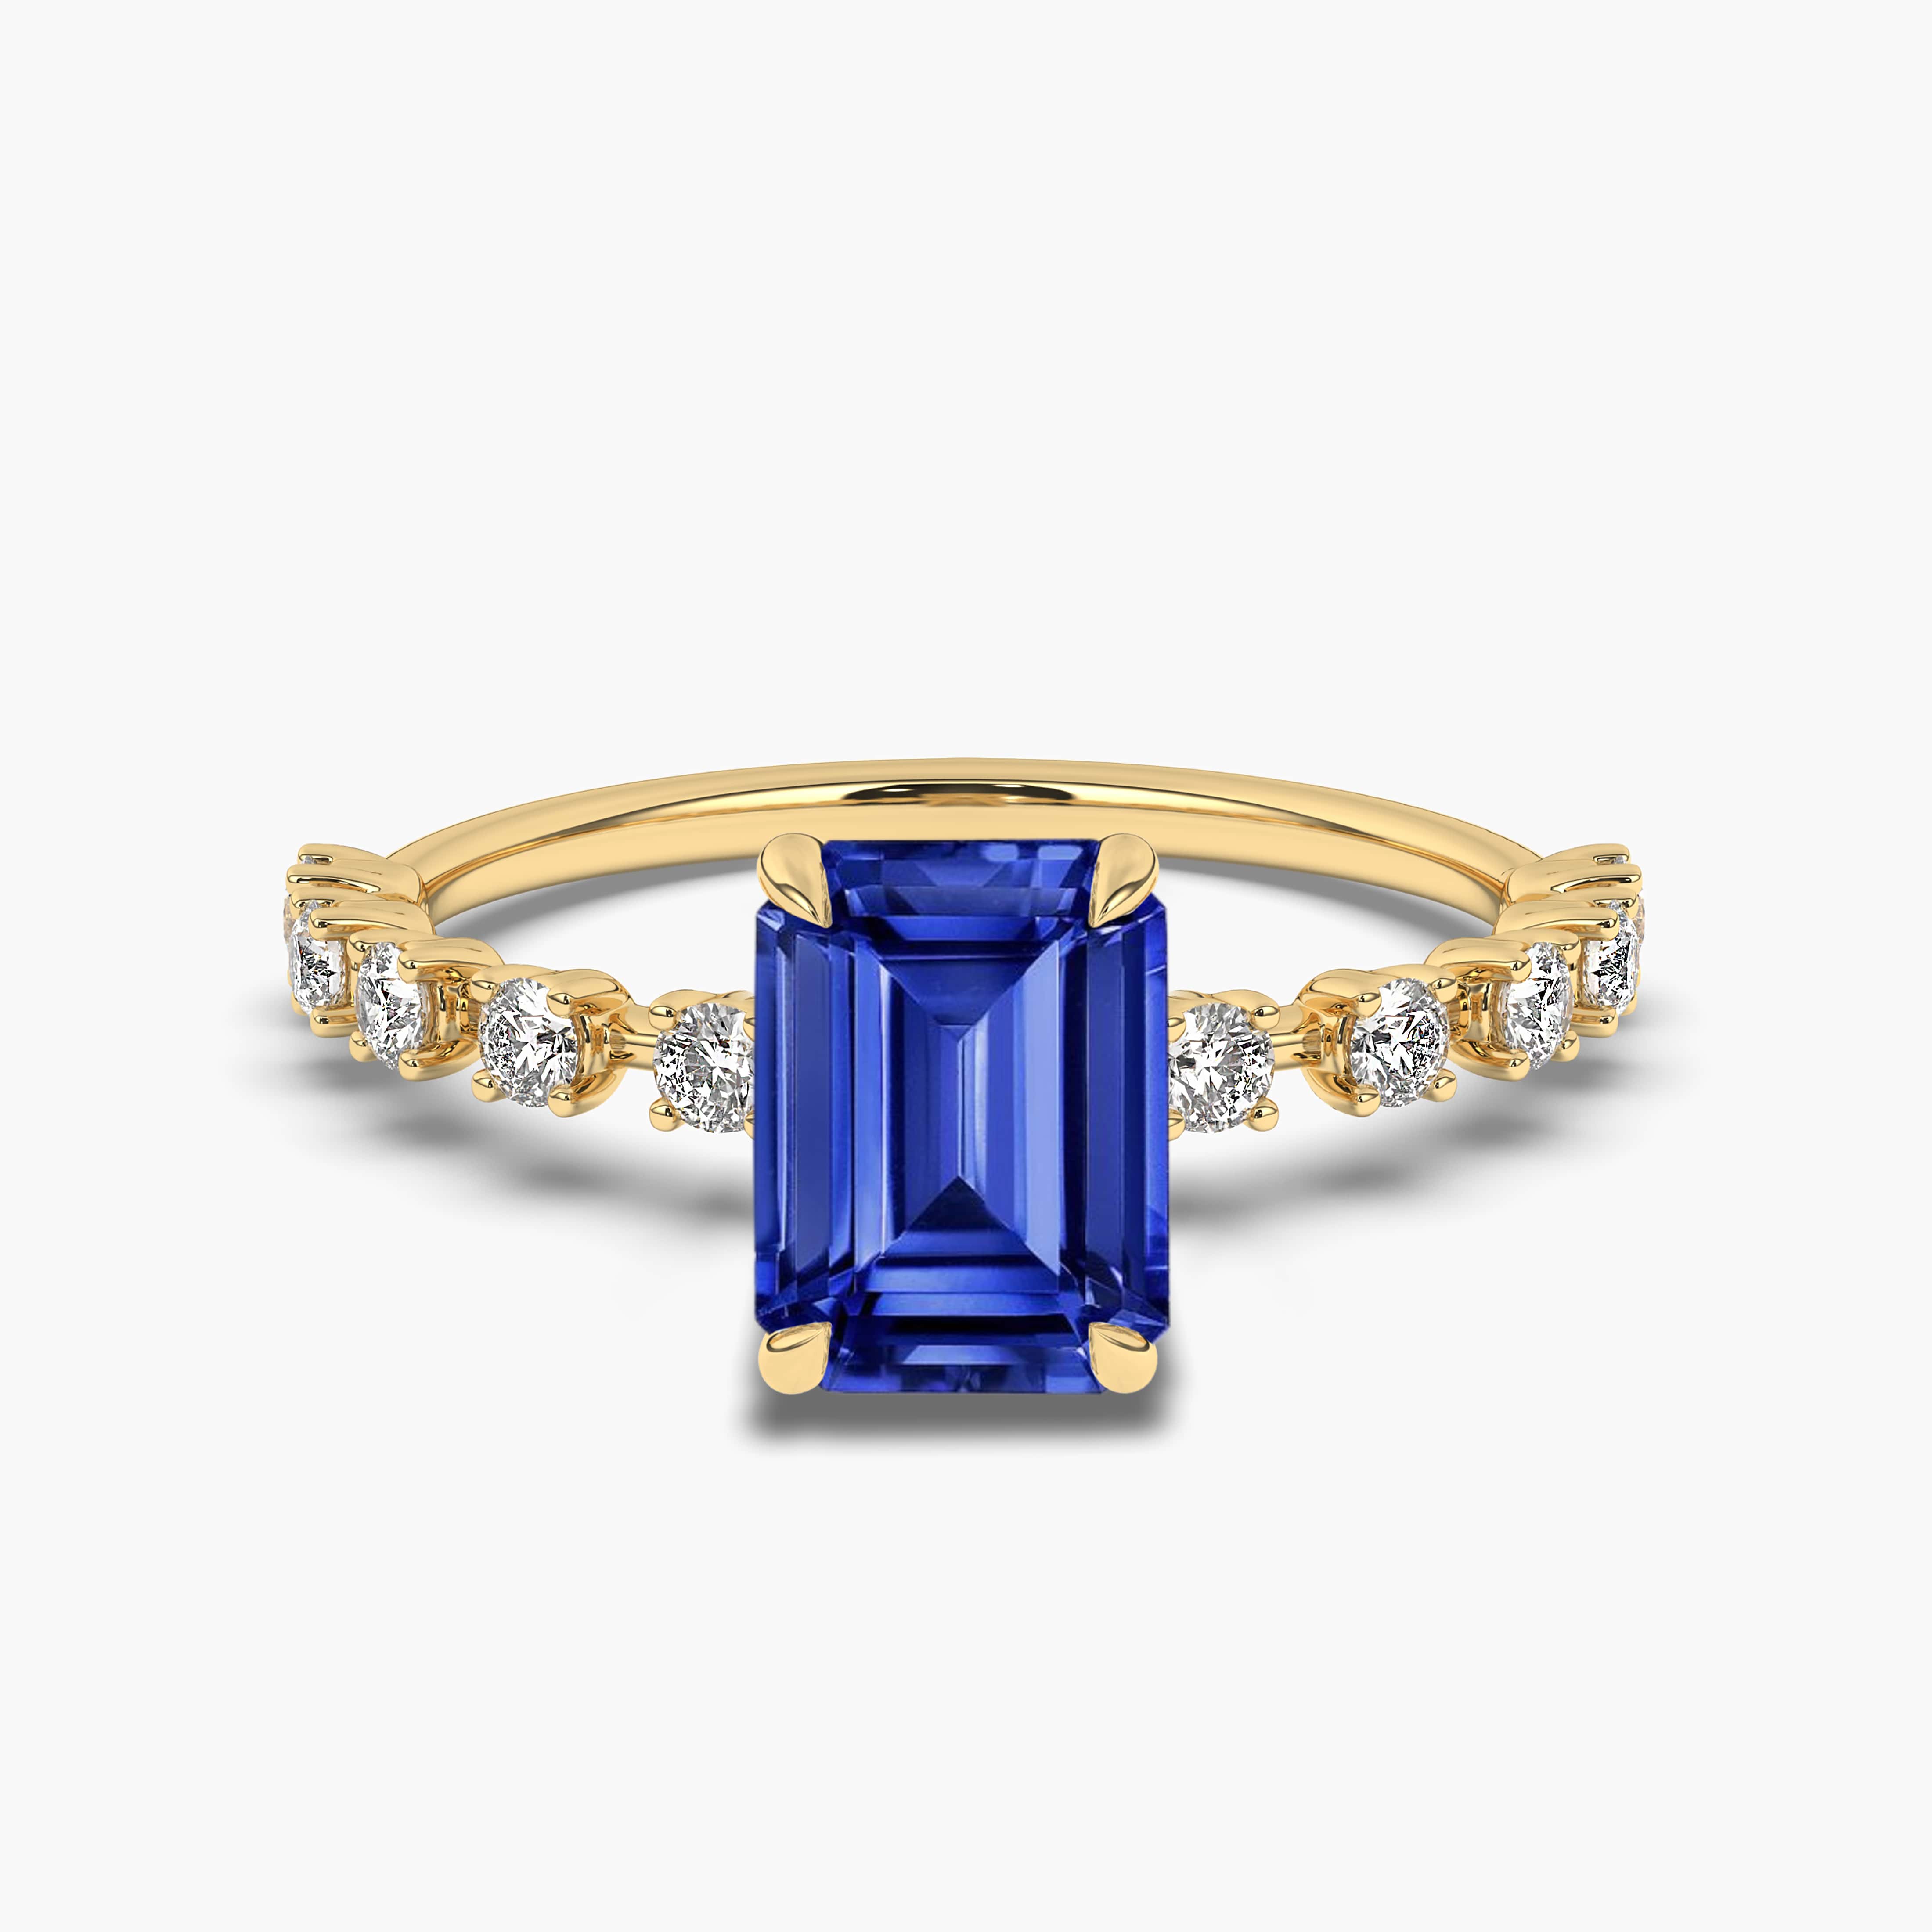 Blue Sapphire Emerald Cut Ring